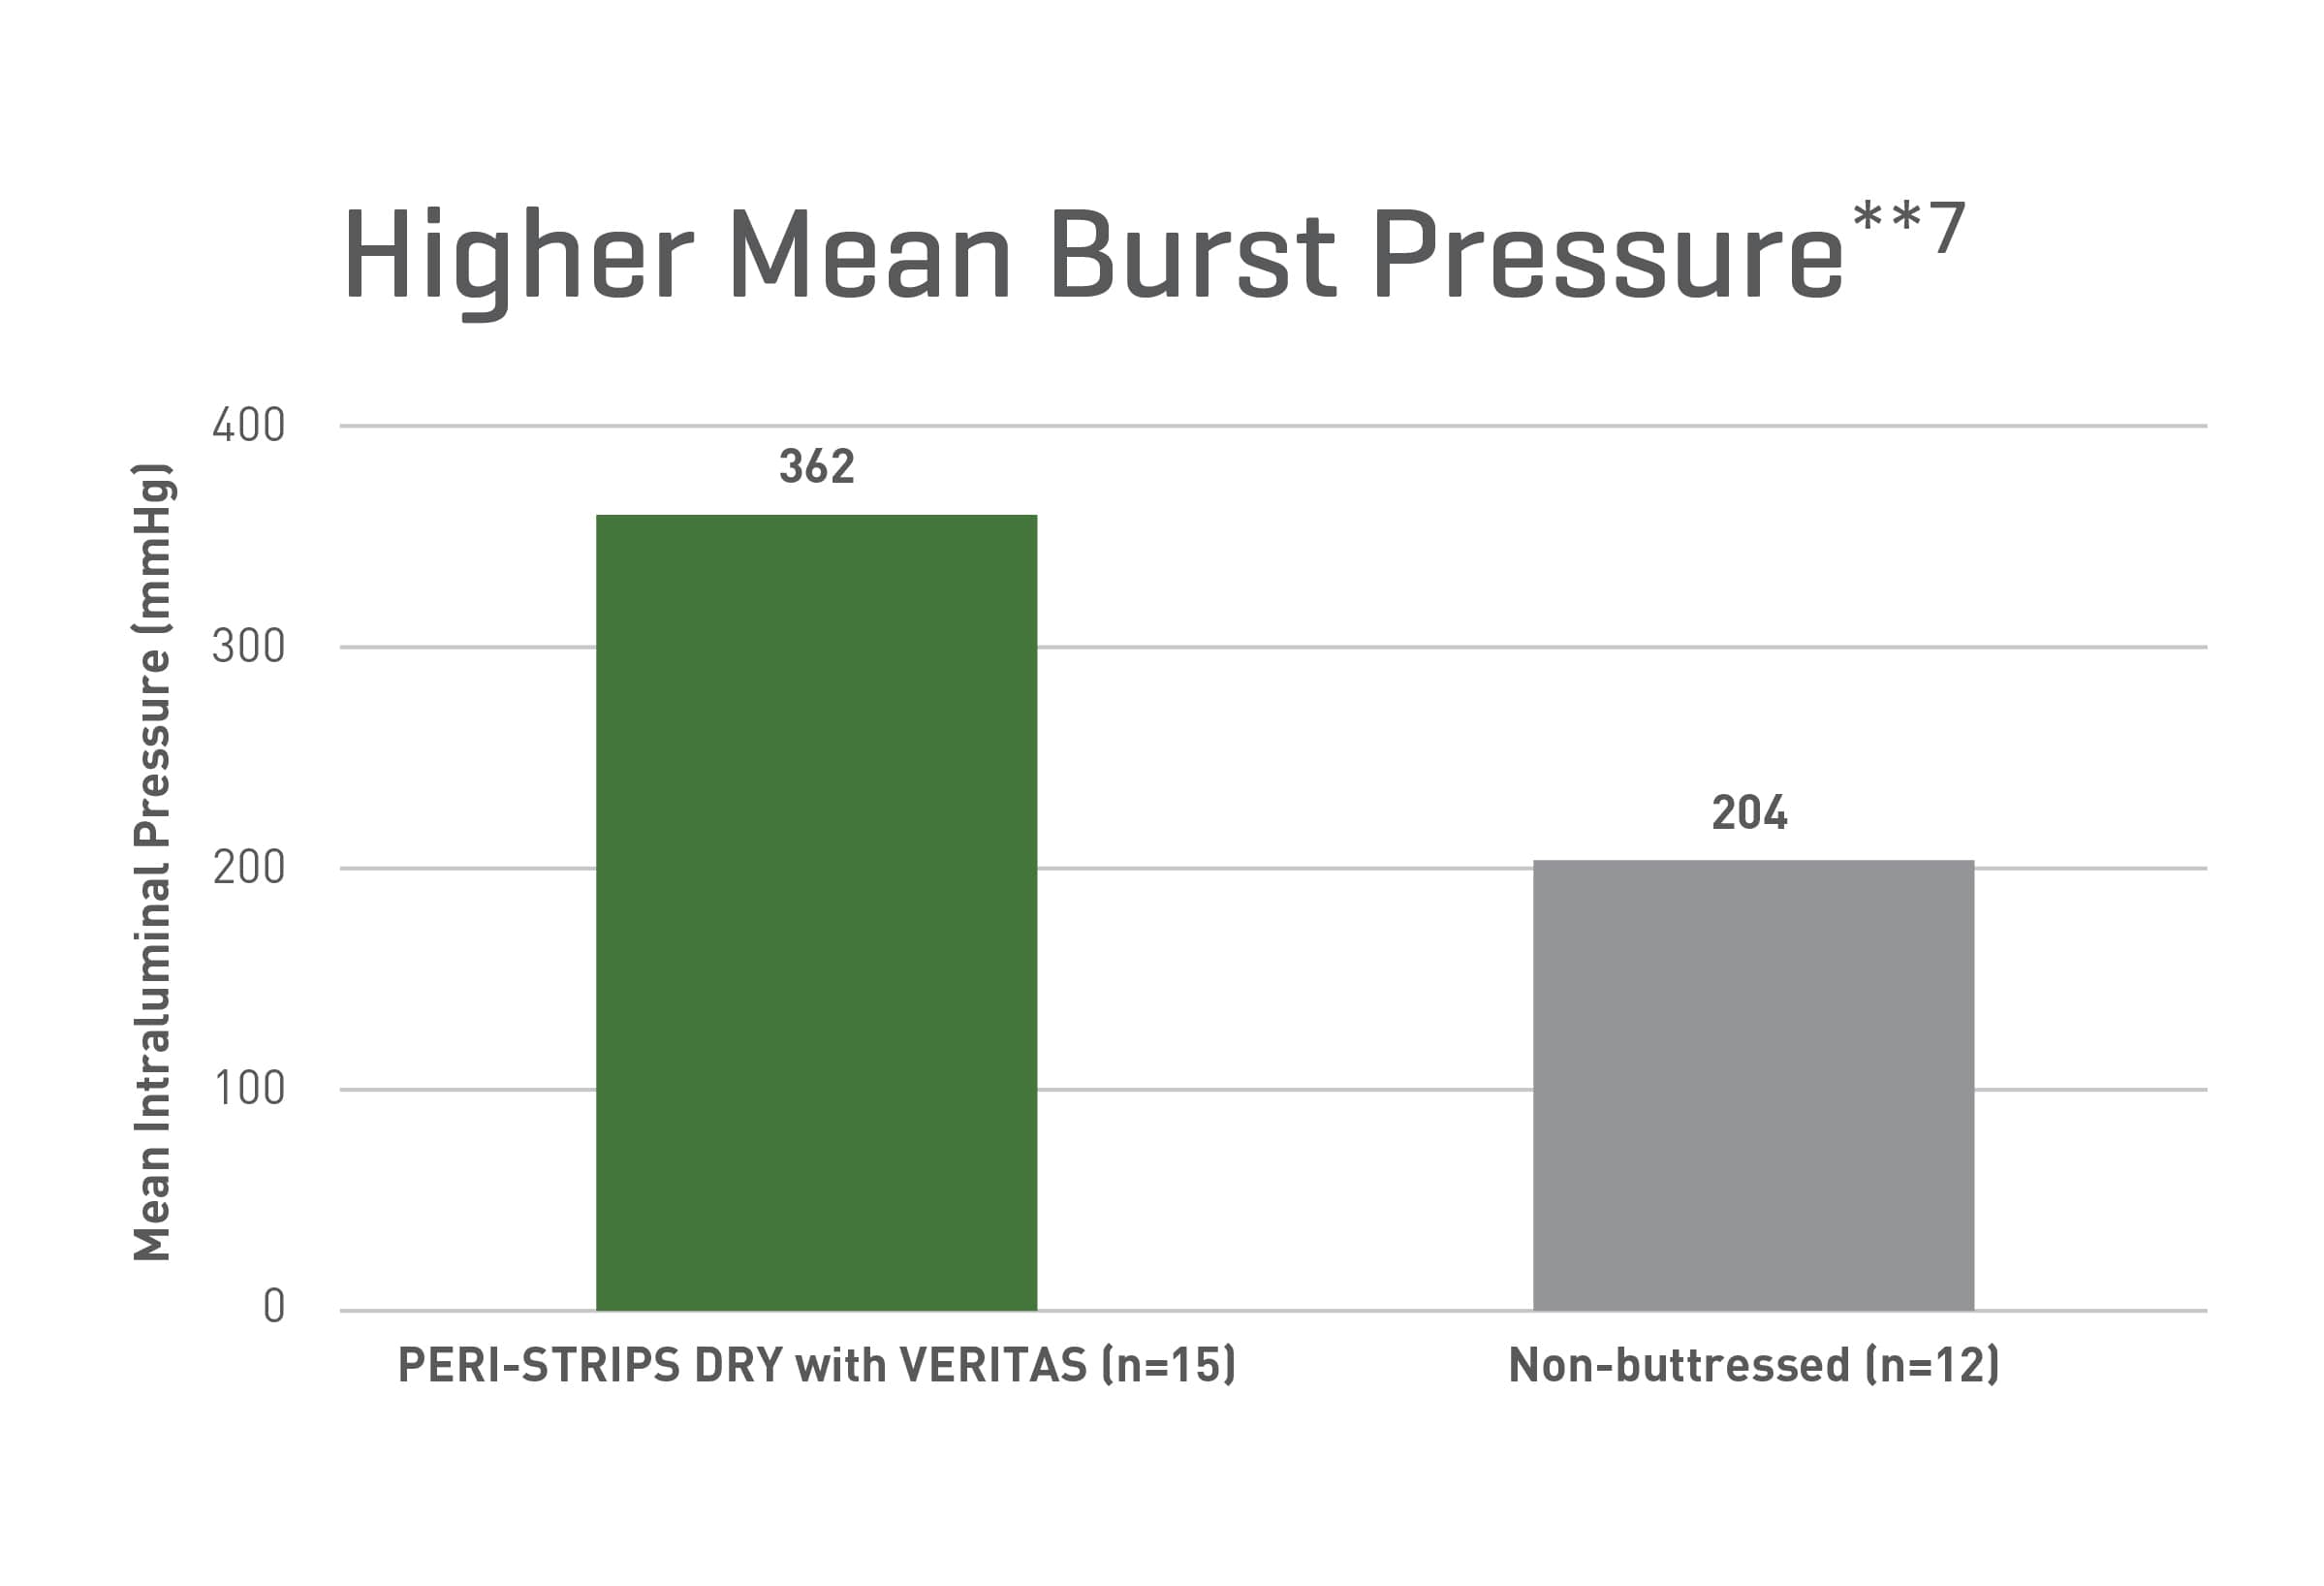 PSDV has a higher mean burst pressure